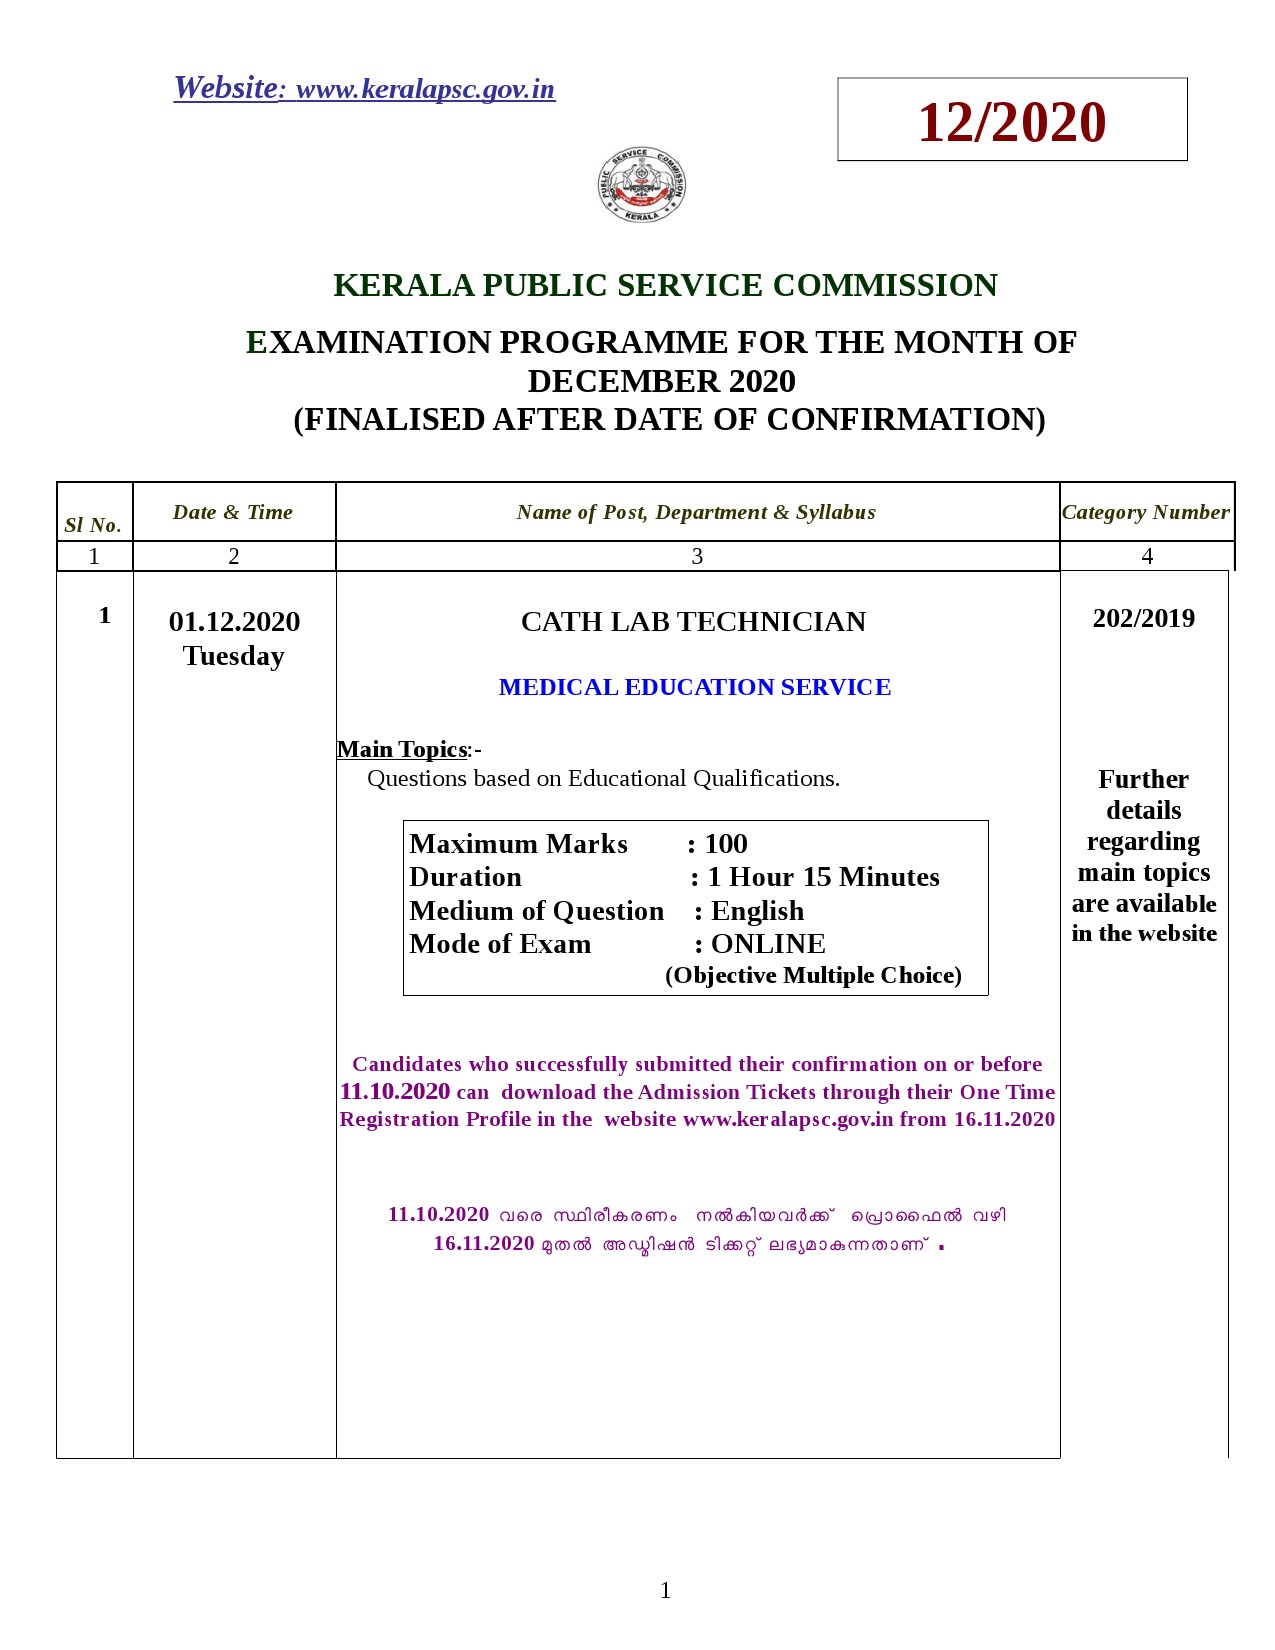 Kerala PSC Exam Calendar for December 2020 - Notification Image 1